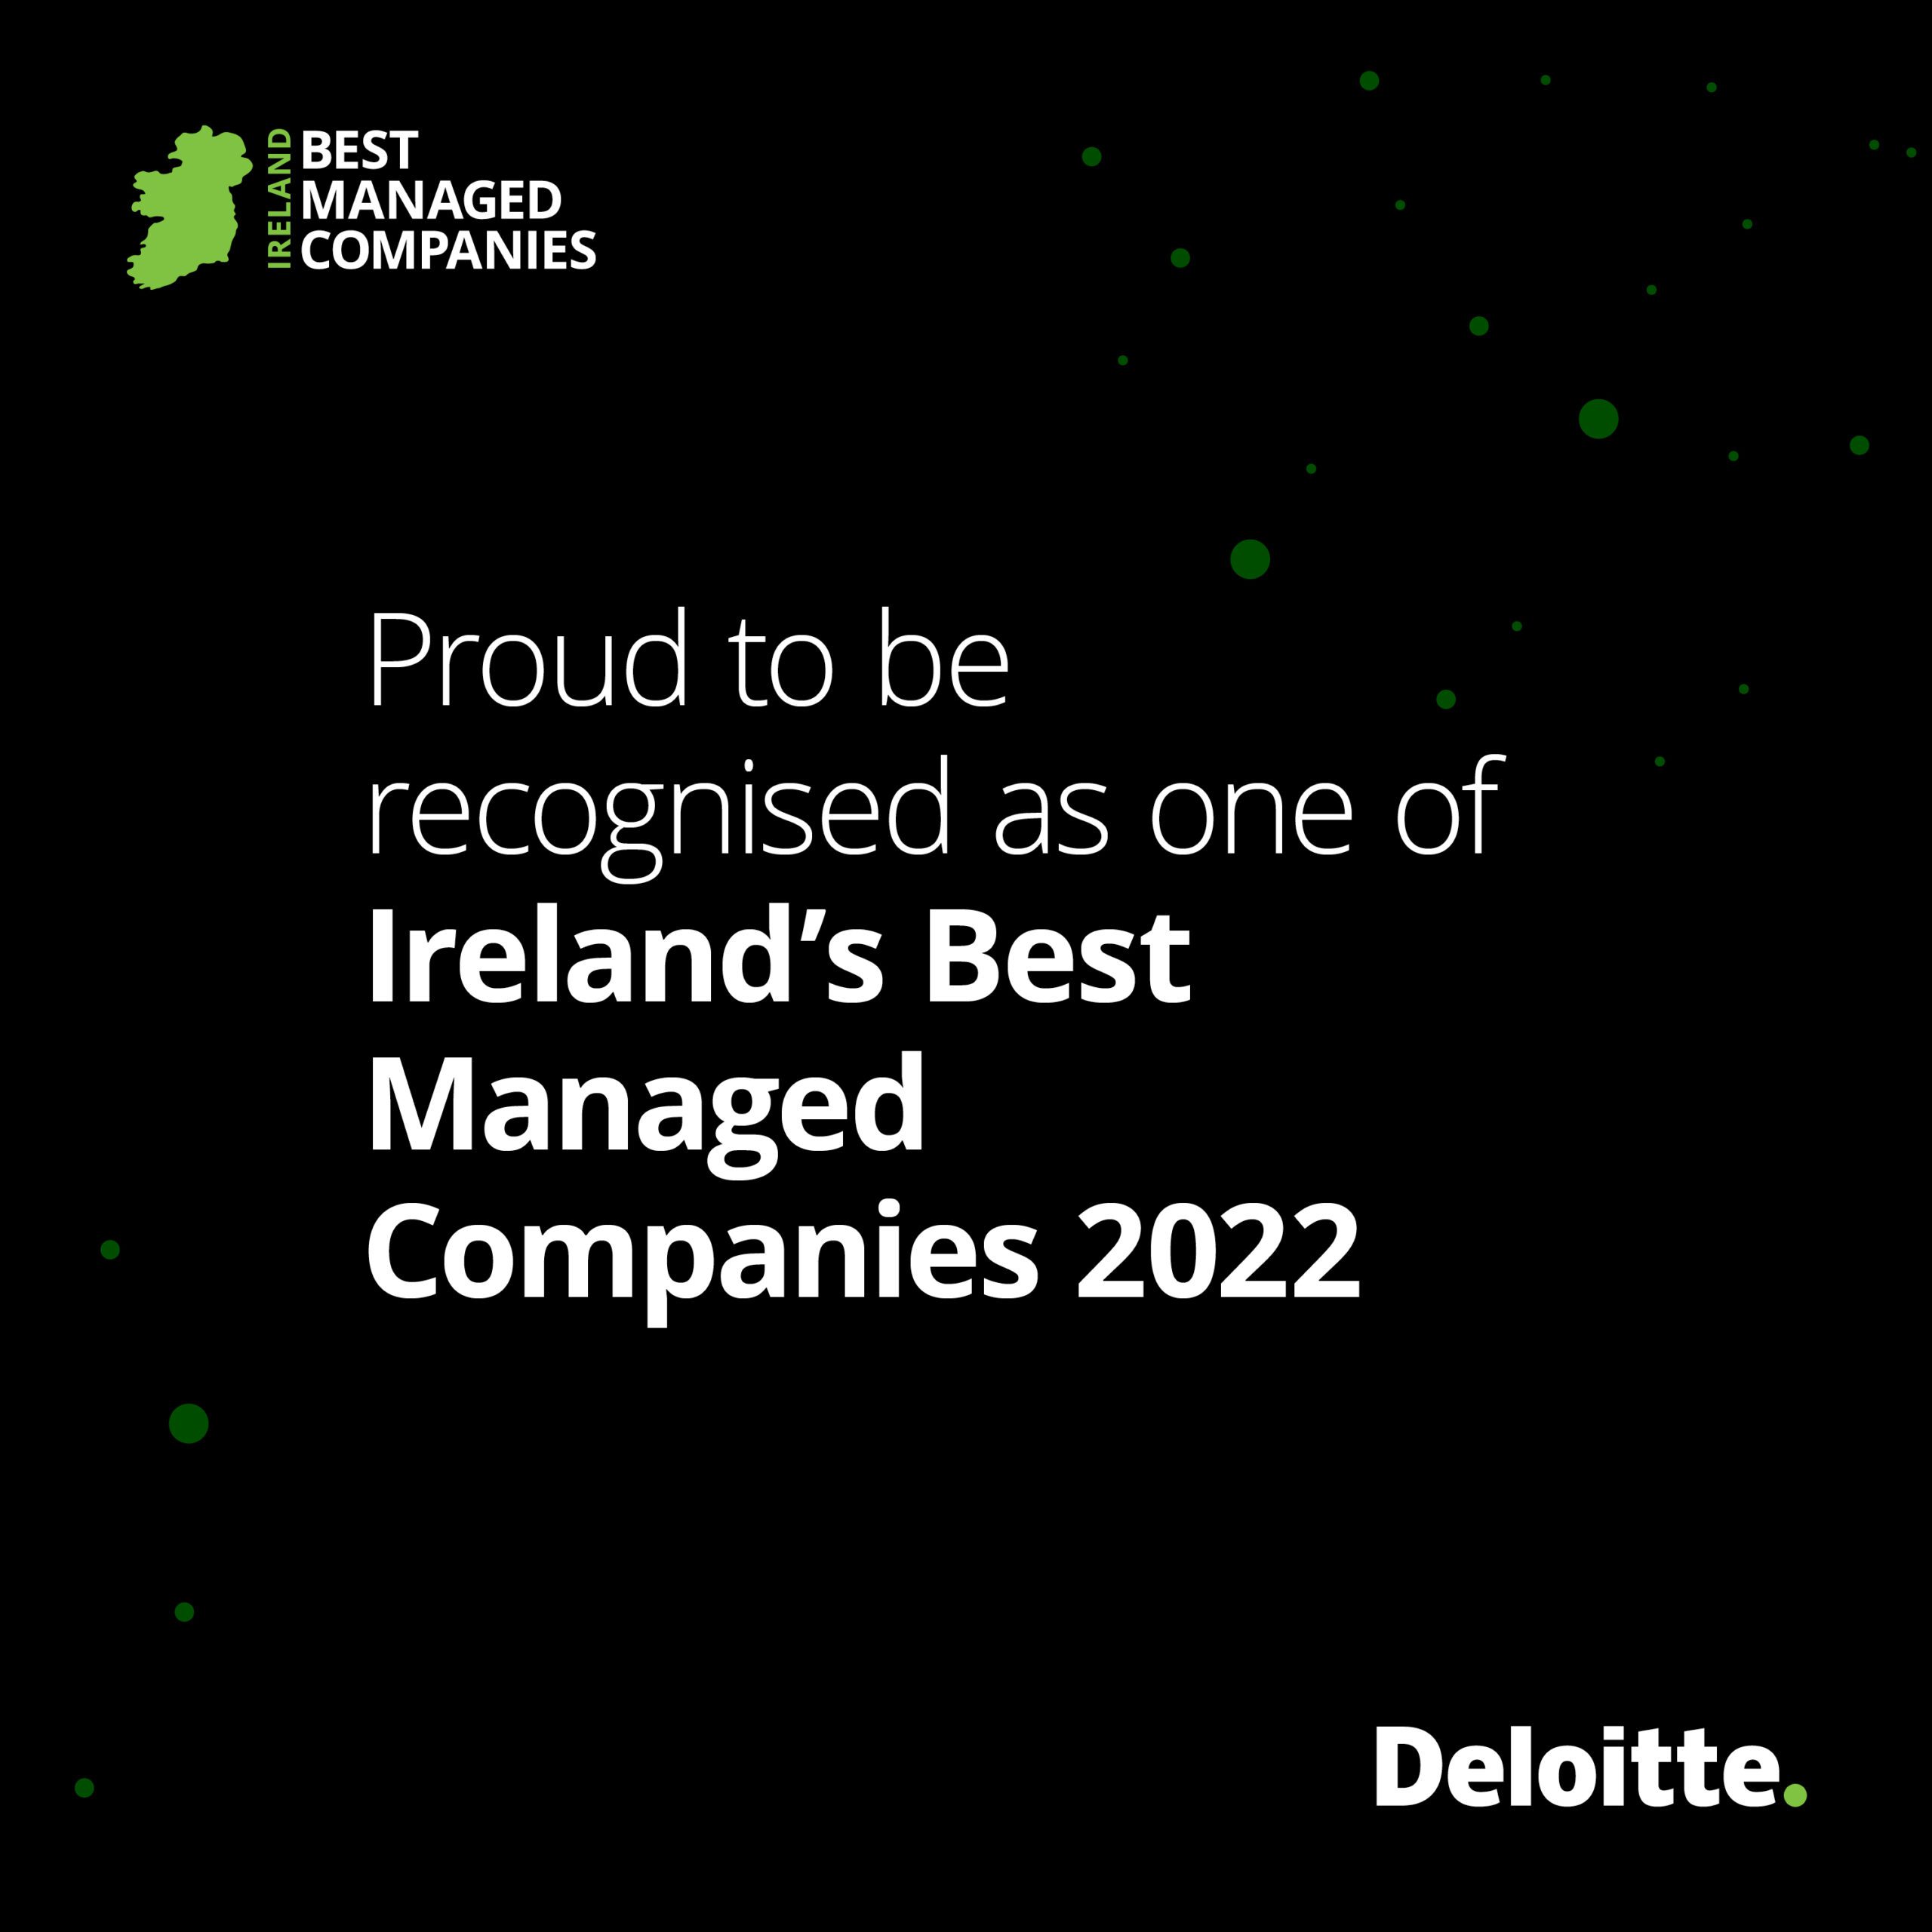 Ireland’s Best Managed Companies 2022